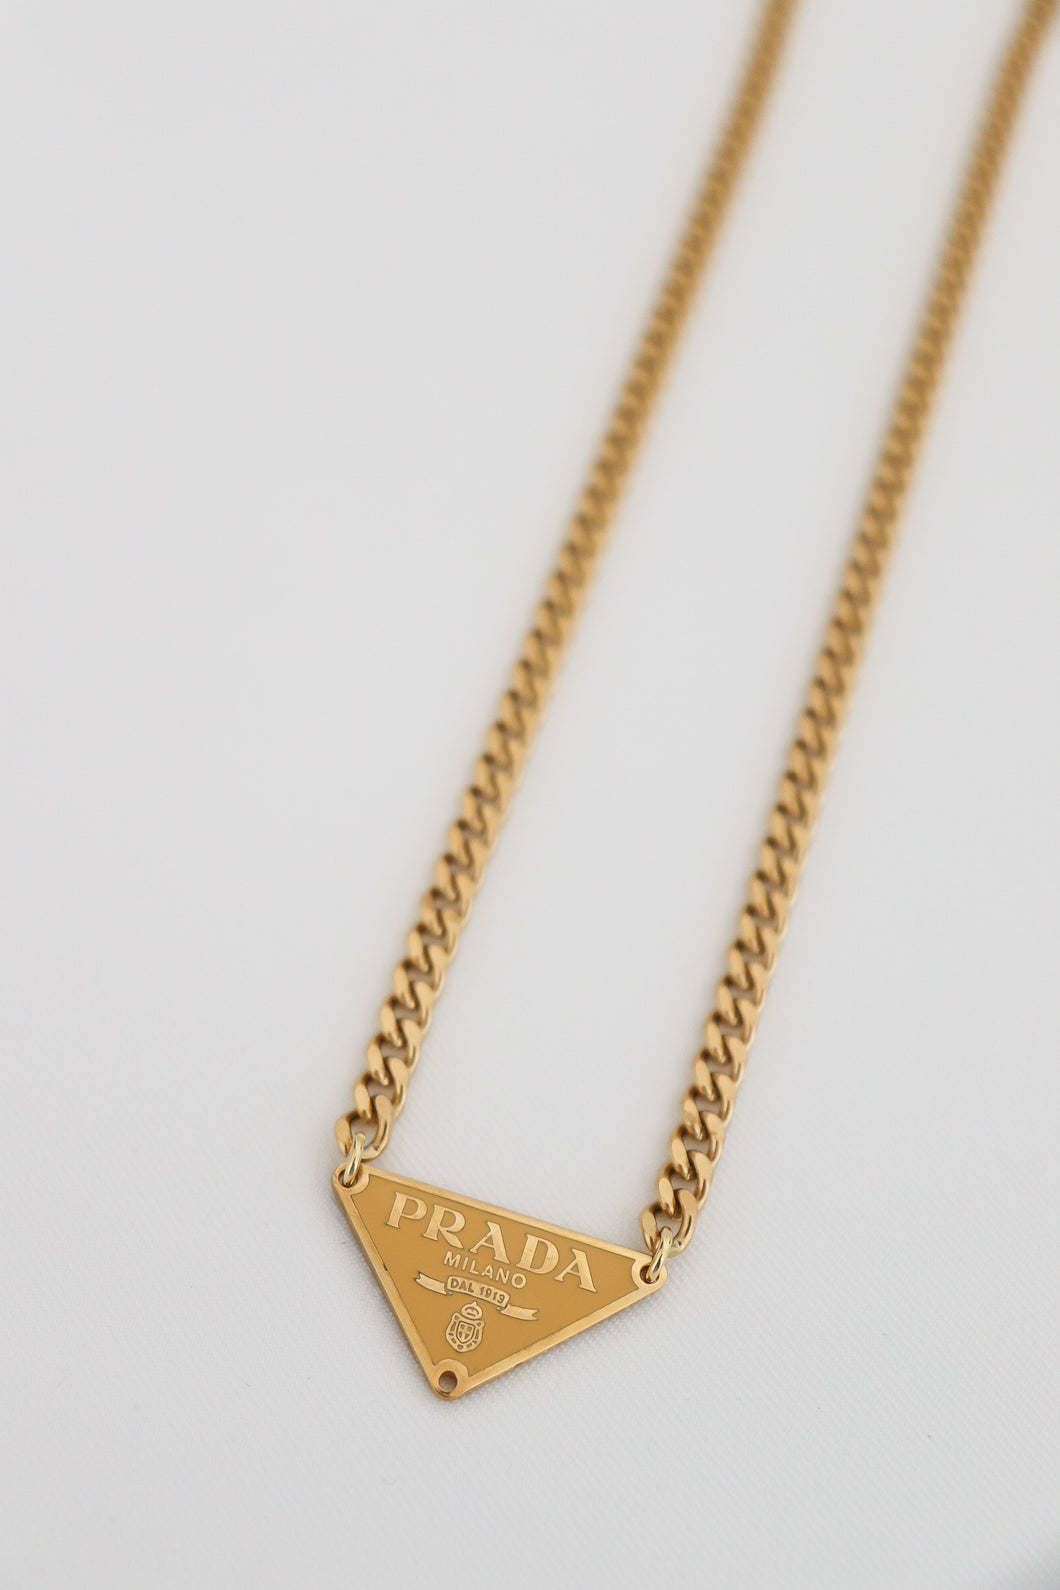 Prada necklace golden cuban chain